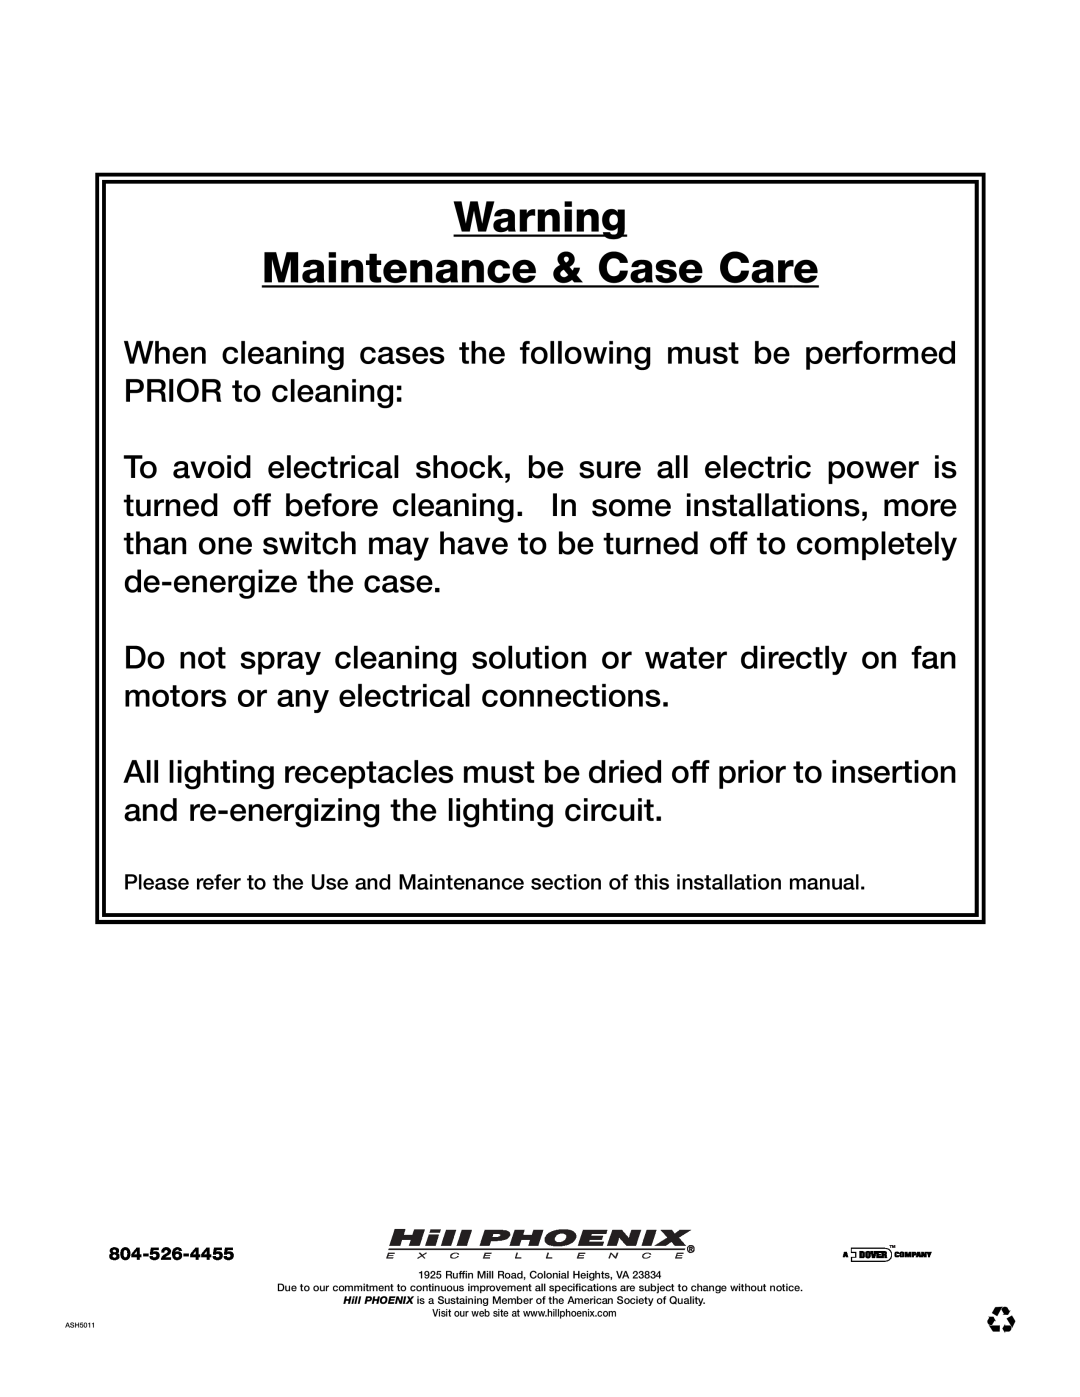 Hill Phoenix KRZH manual Maintenance & Case Care 